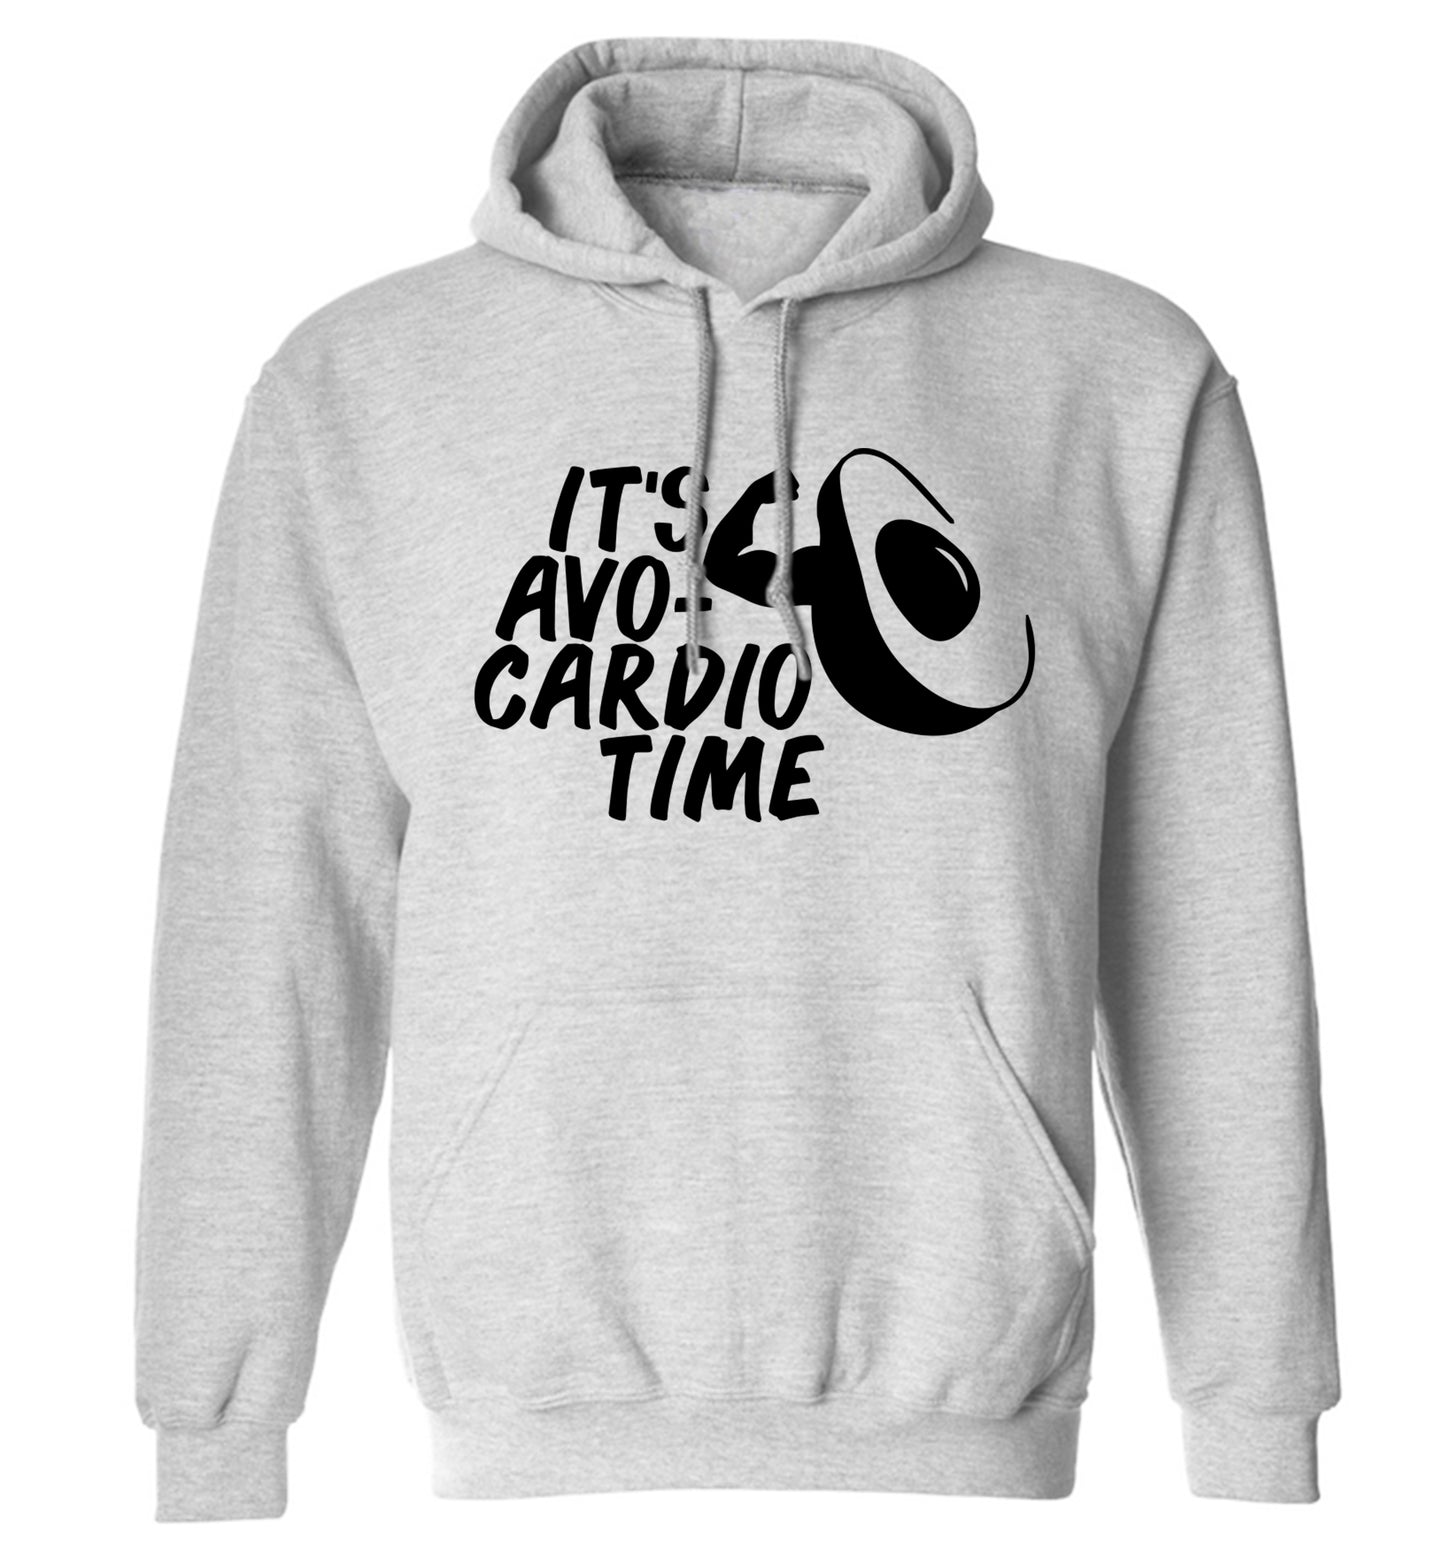 It's avo-cardio time adults unisex grey hoodie 2XL